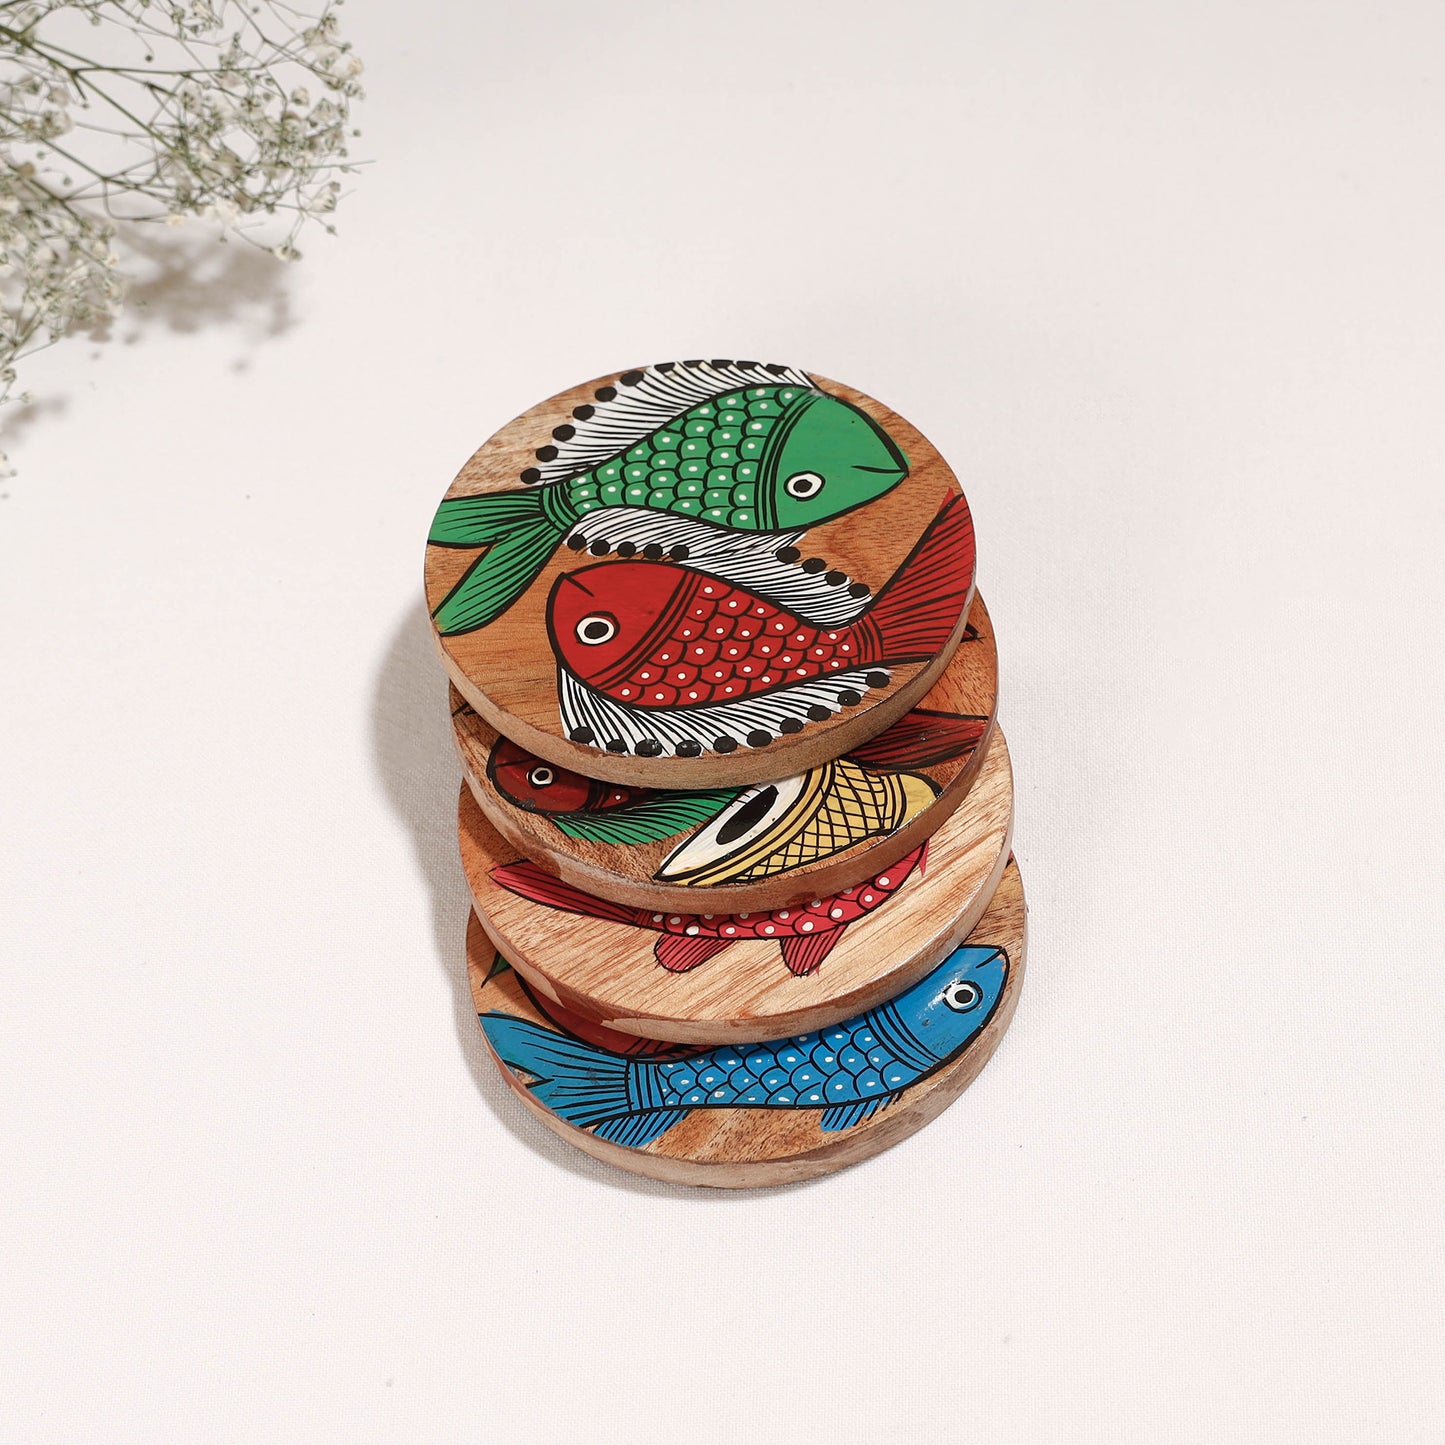 Handpainted Wooden Coasters